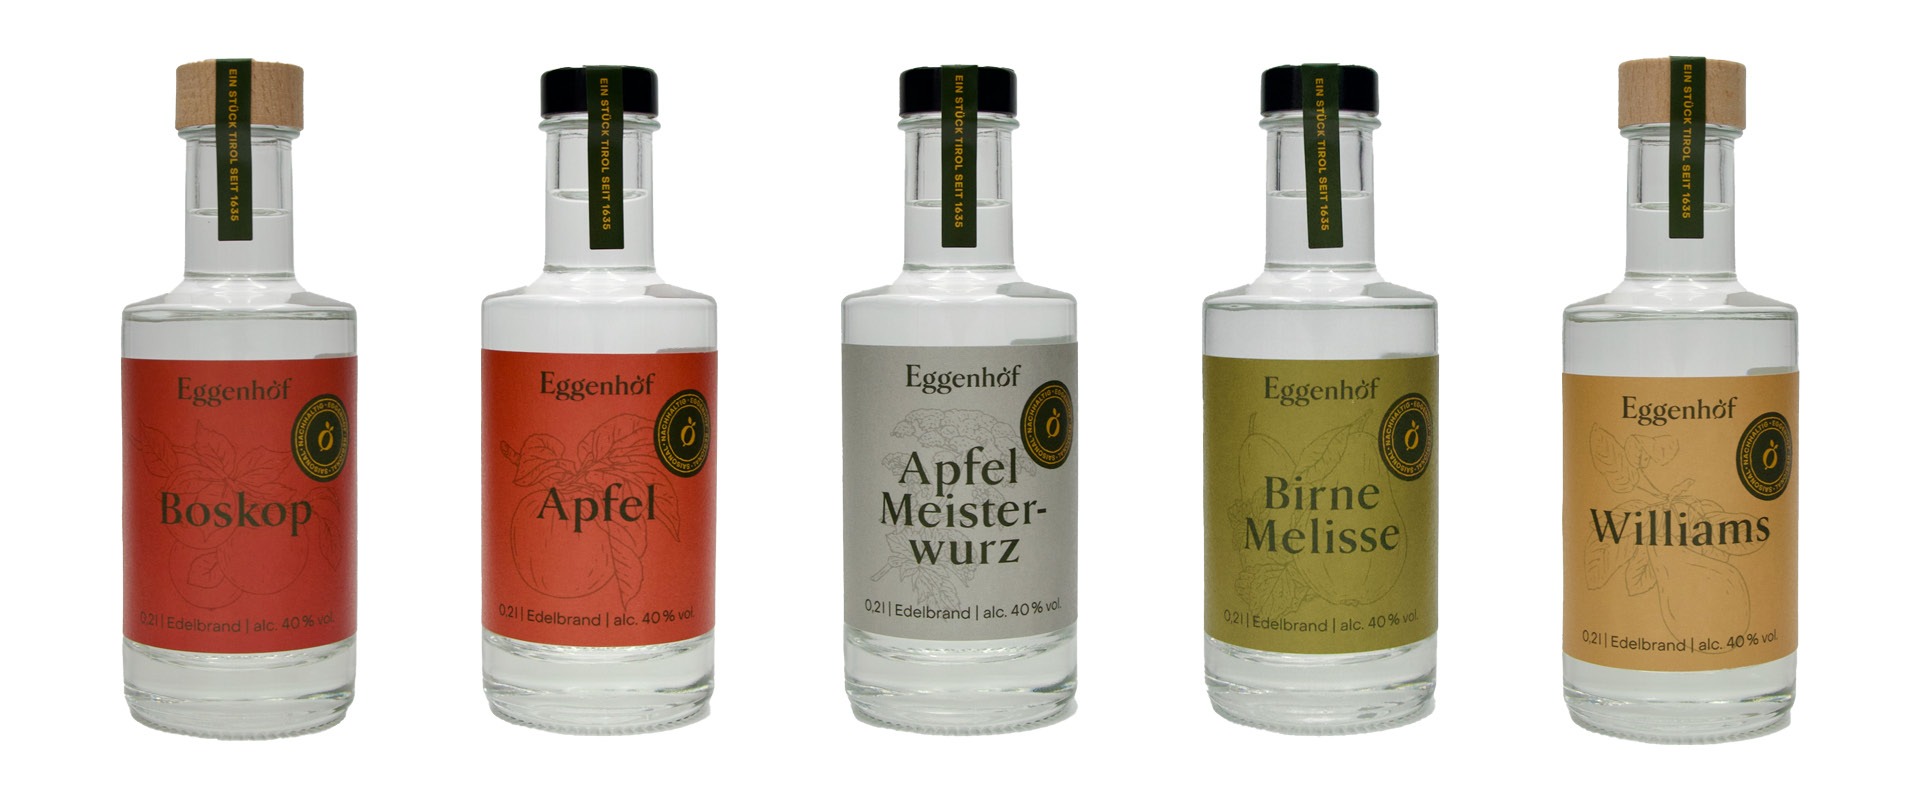 Five bottles of gin with Eggenhof labels.